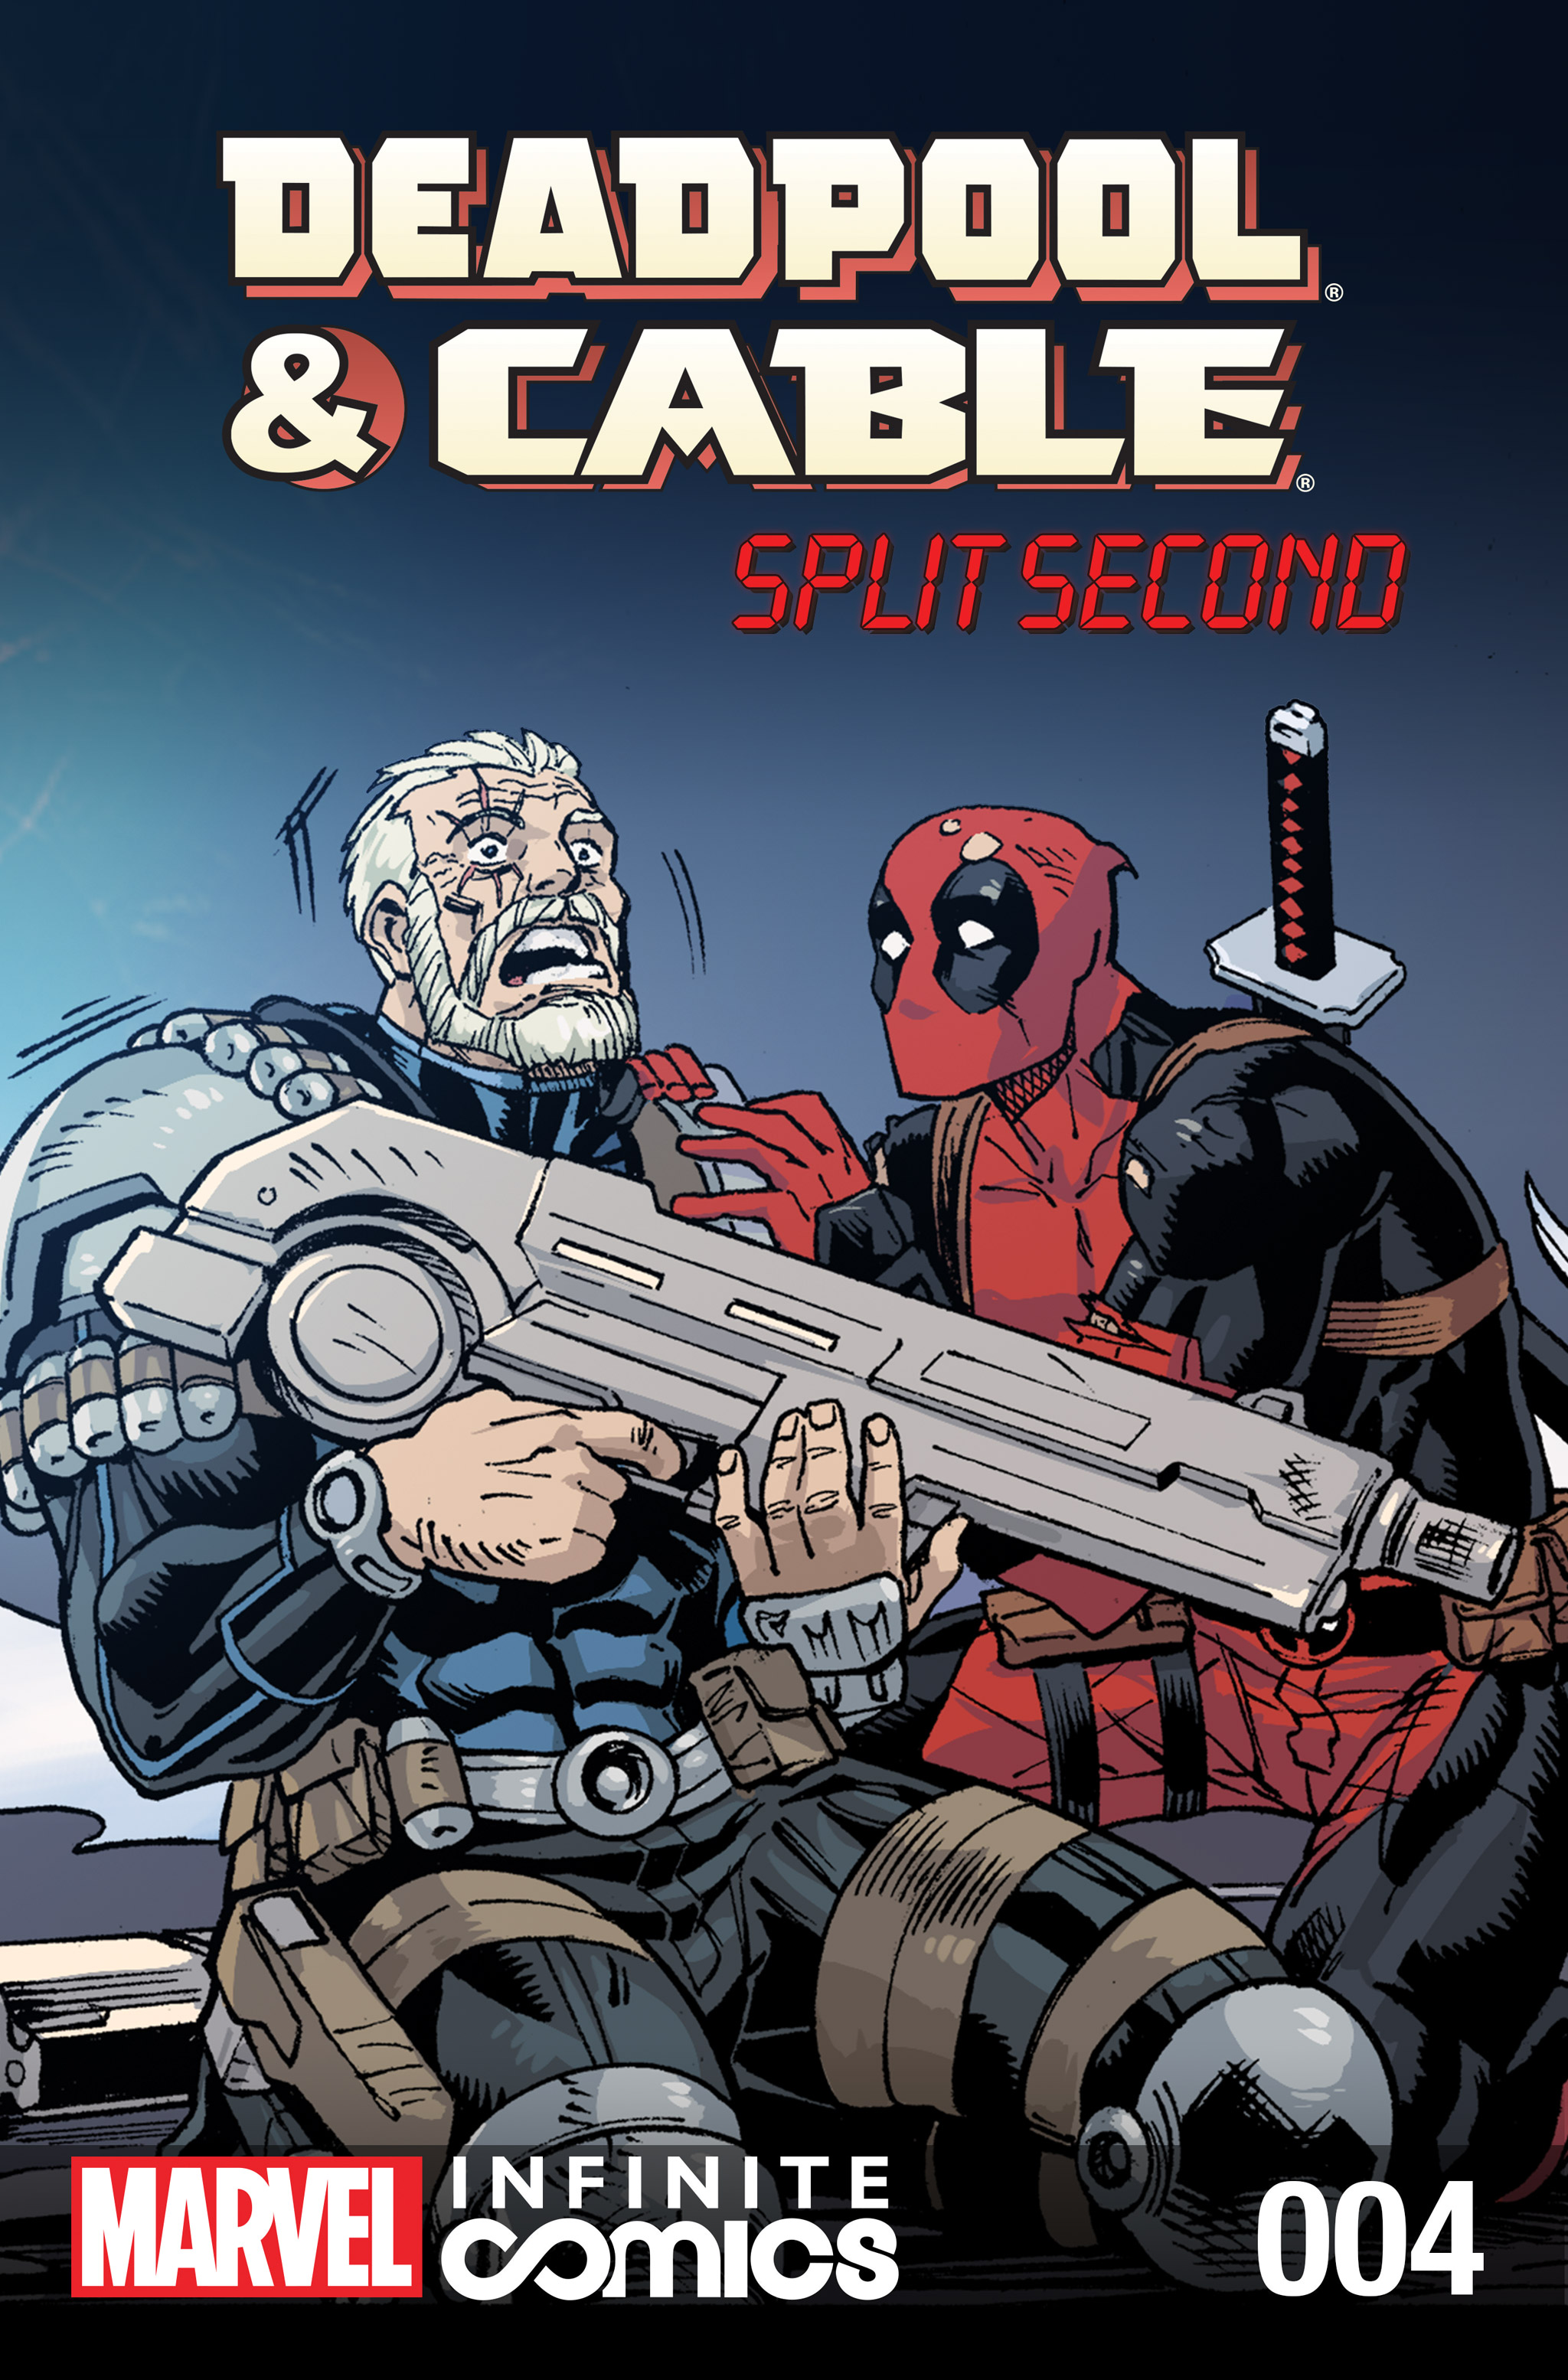 Deadpool Cable Split Second Infinite Comic Viewcomic